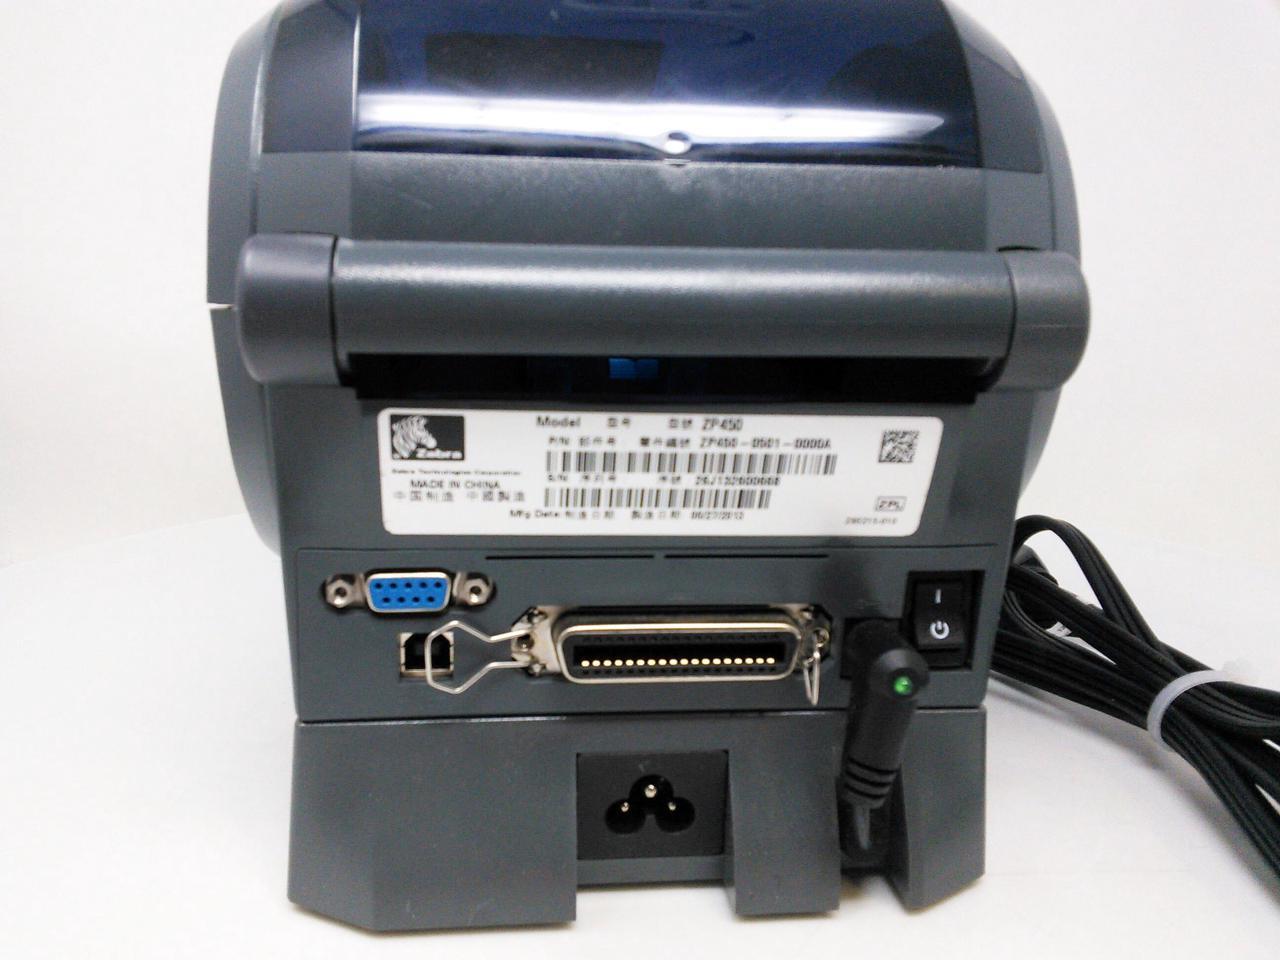 Genuine Zebra Zp450 Thermal Label Printer 0501 0000a Neweggca 7750